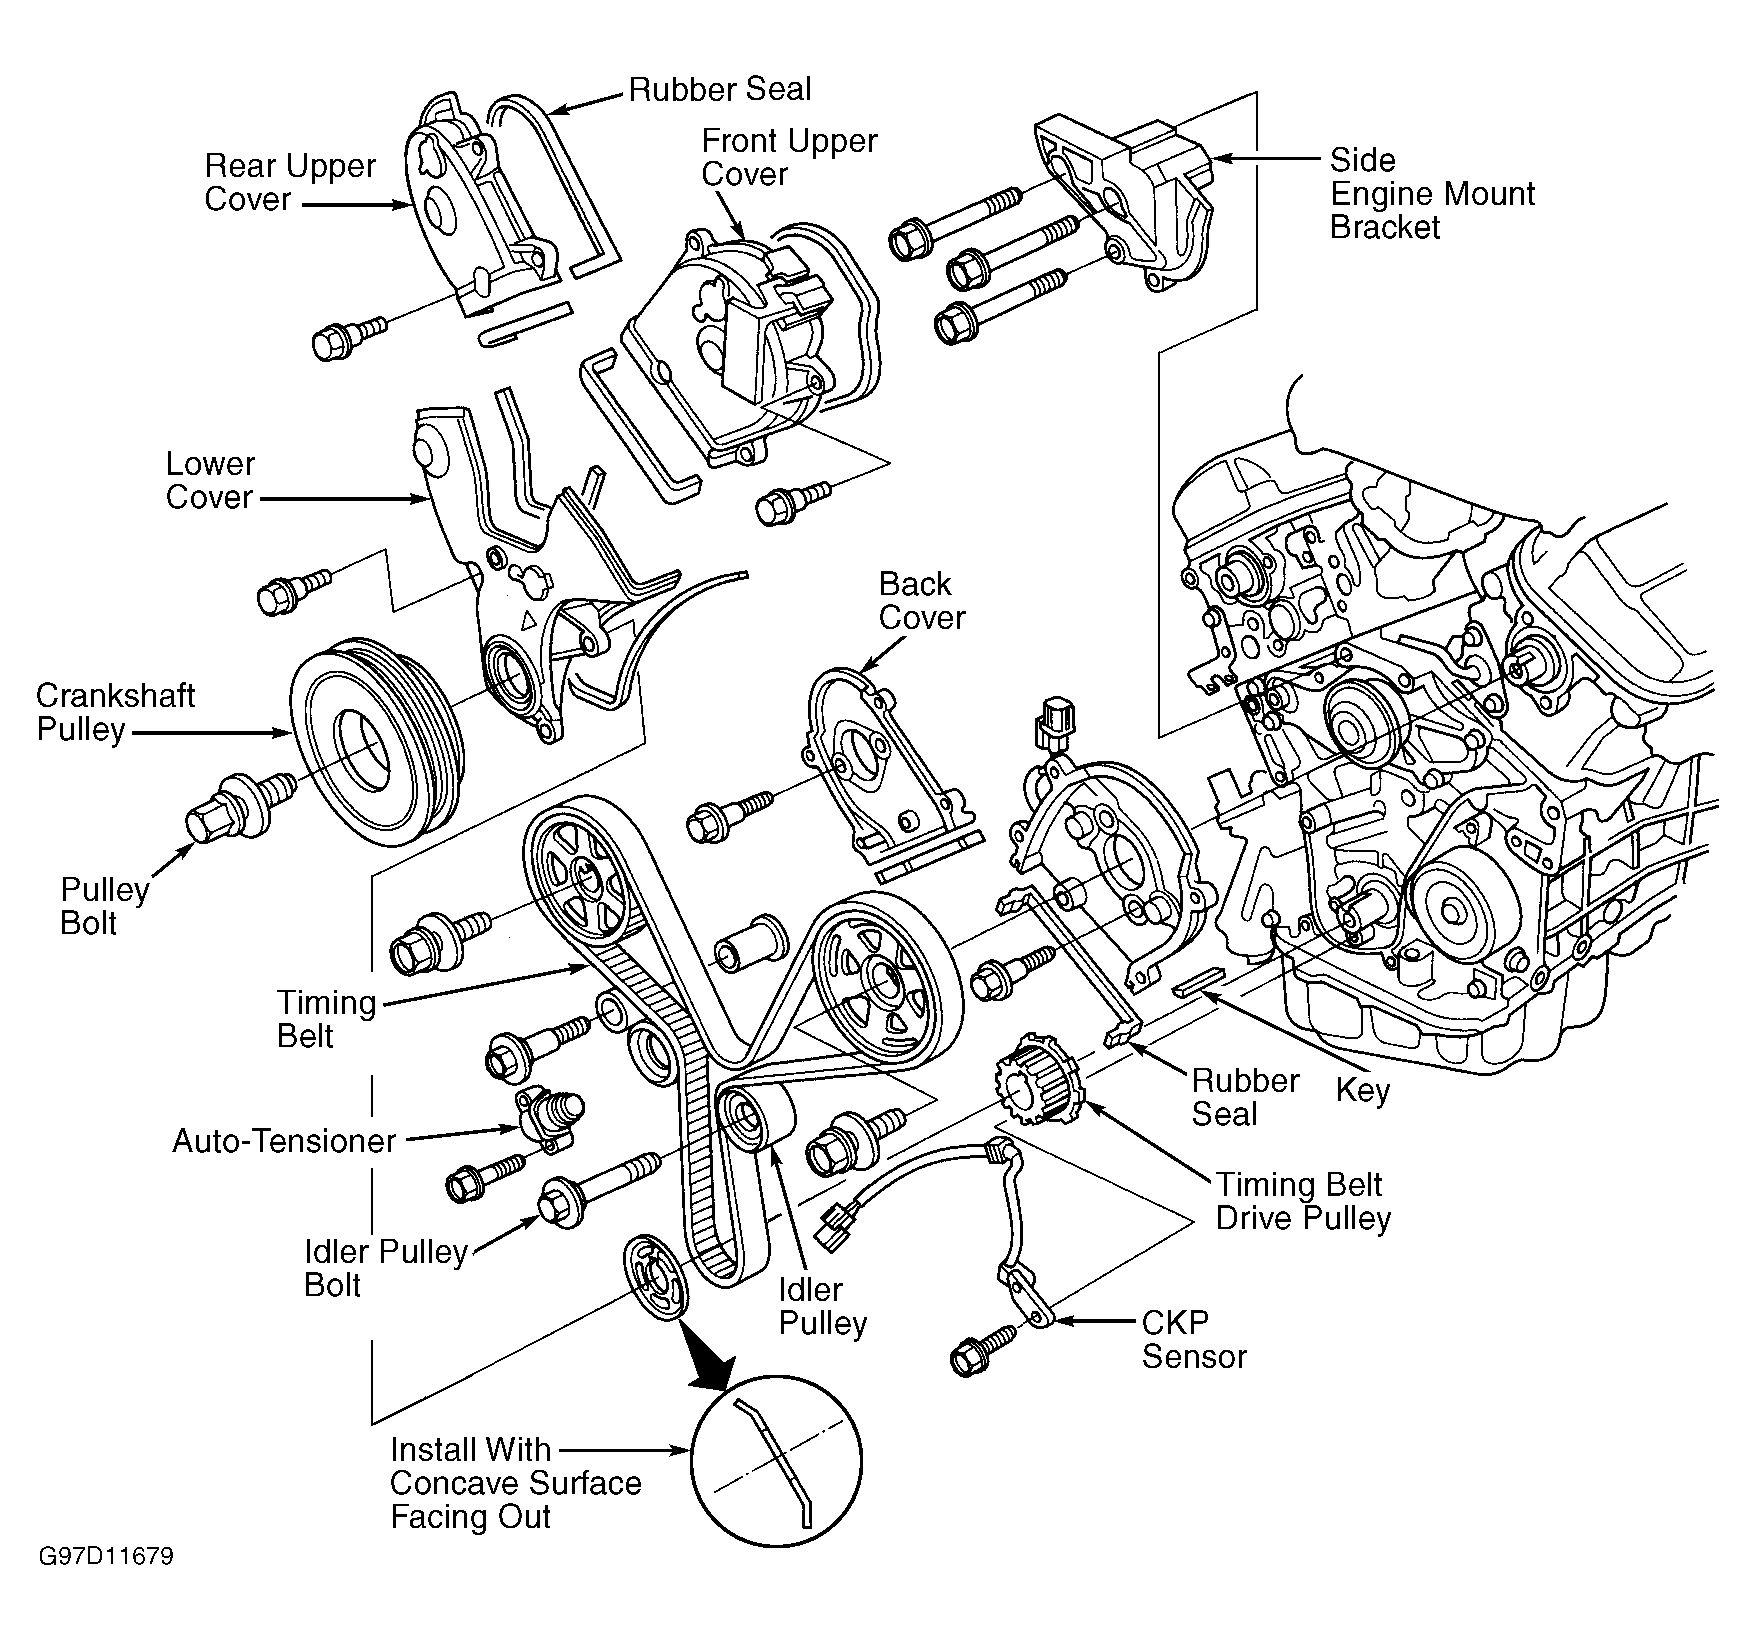 1999 Honda Odyssey Serpentine Belt Routing and Timing Belt Diagrams